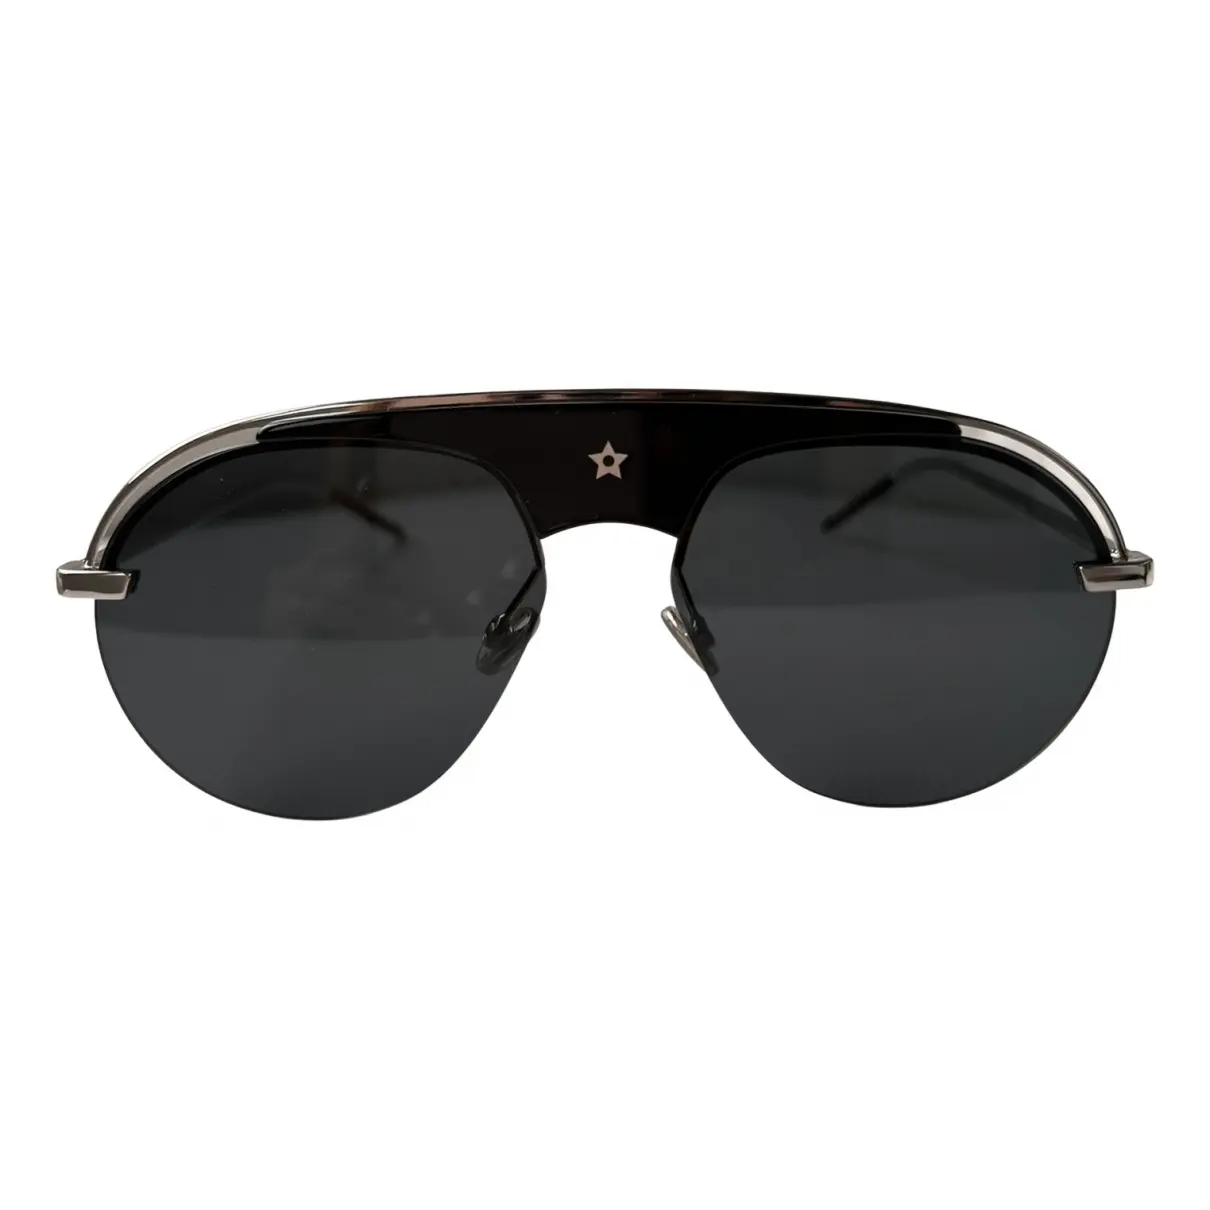 Dio(r)evolution aviator sunglasses Dior